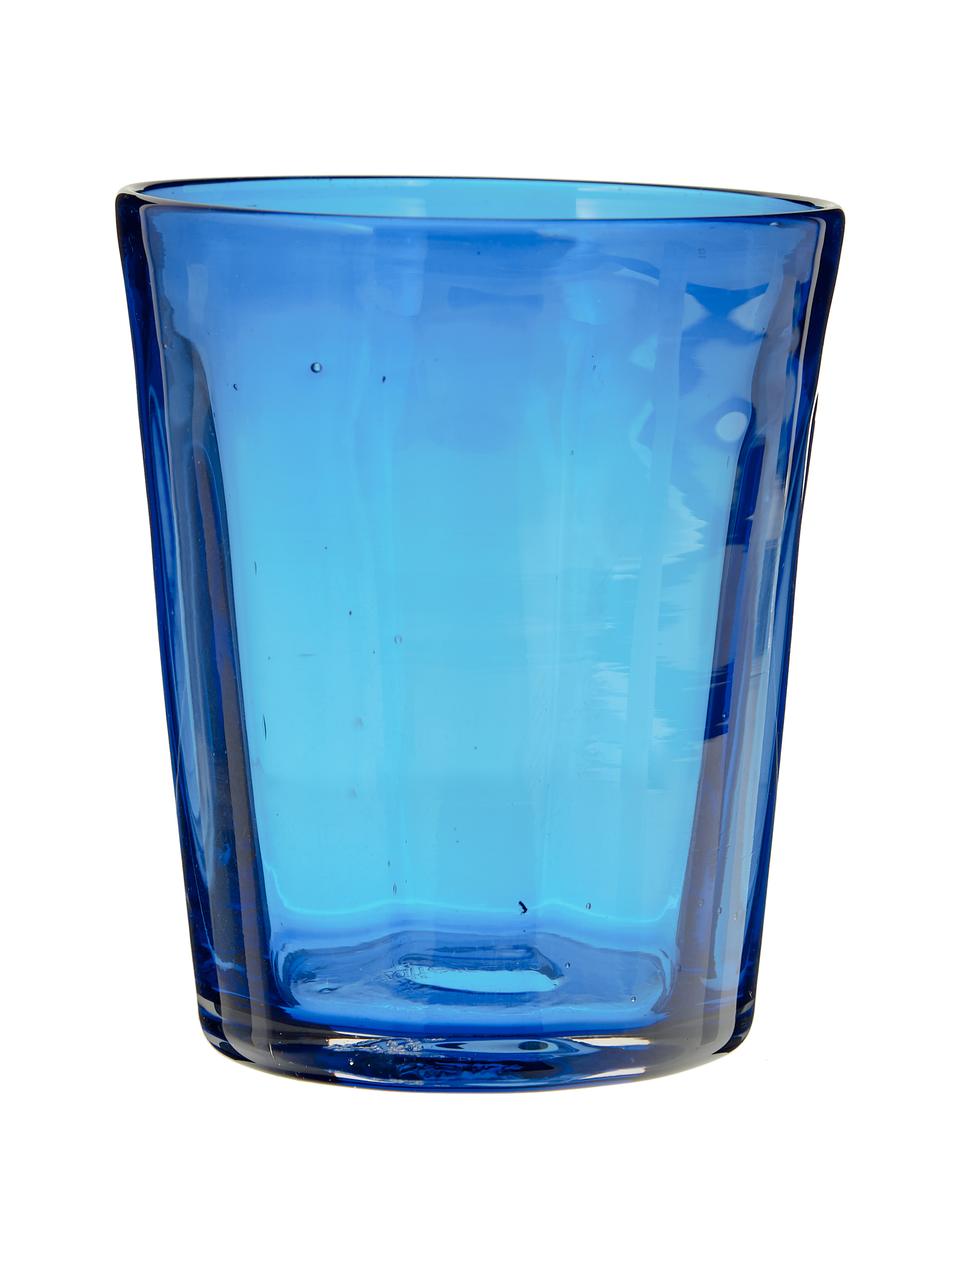 Mundgeblasene Wassergläser Melting Pot Sea in Blautönen, 6er-Set, Glas, Blautöne, Transparent, Ø 7-9 x H 9-11 cm, 250-440 ml